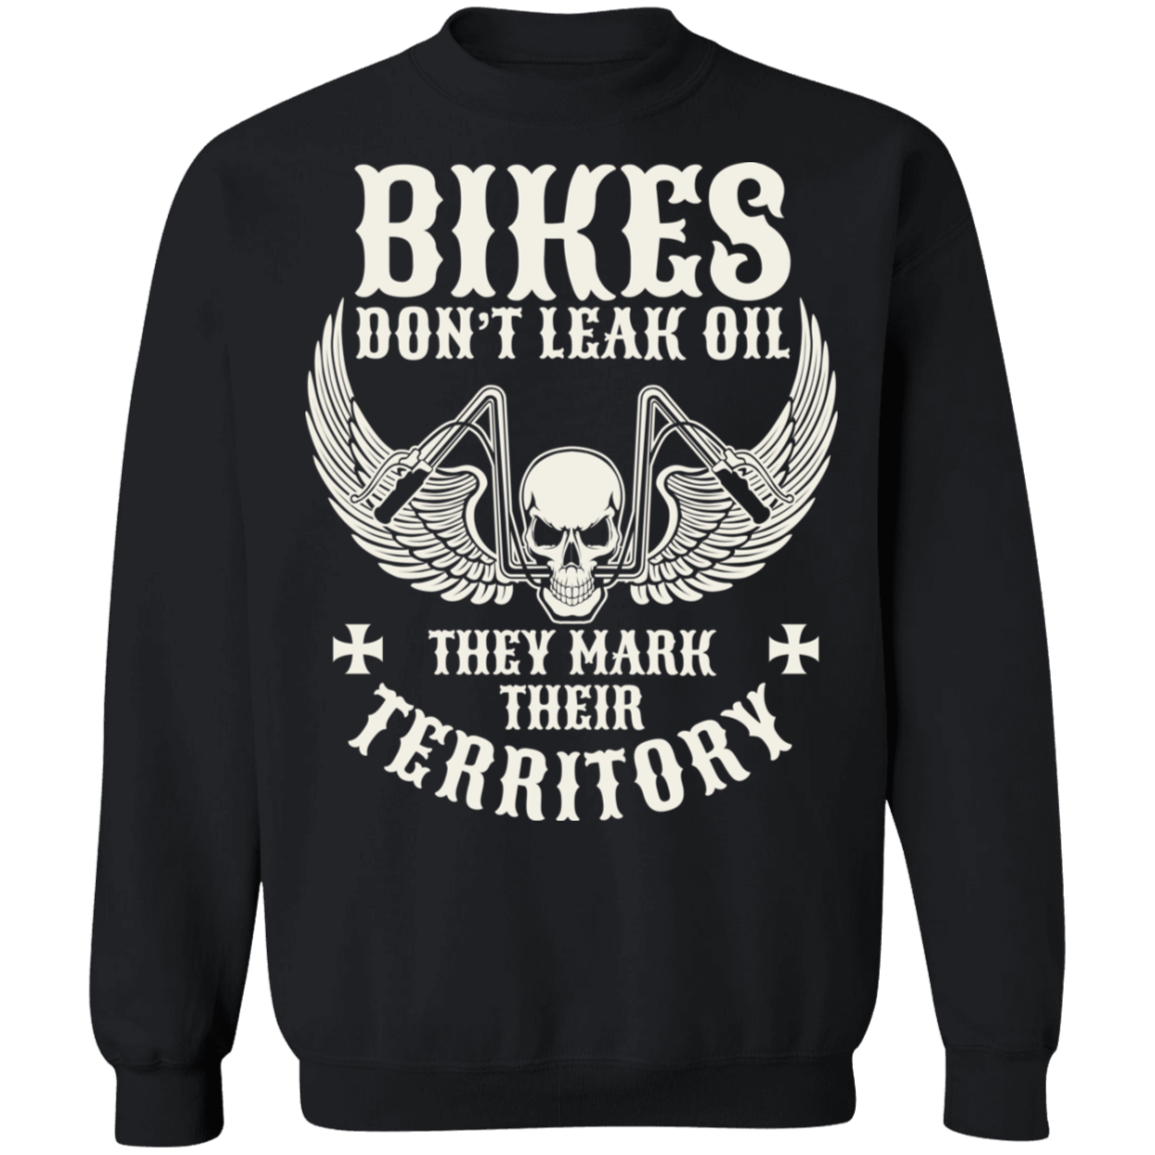 Bikes don’t leak oil, they mark their territory Shirt